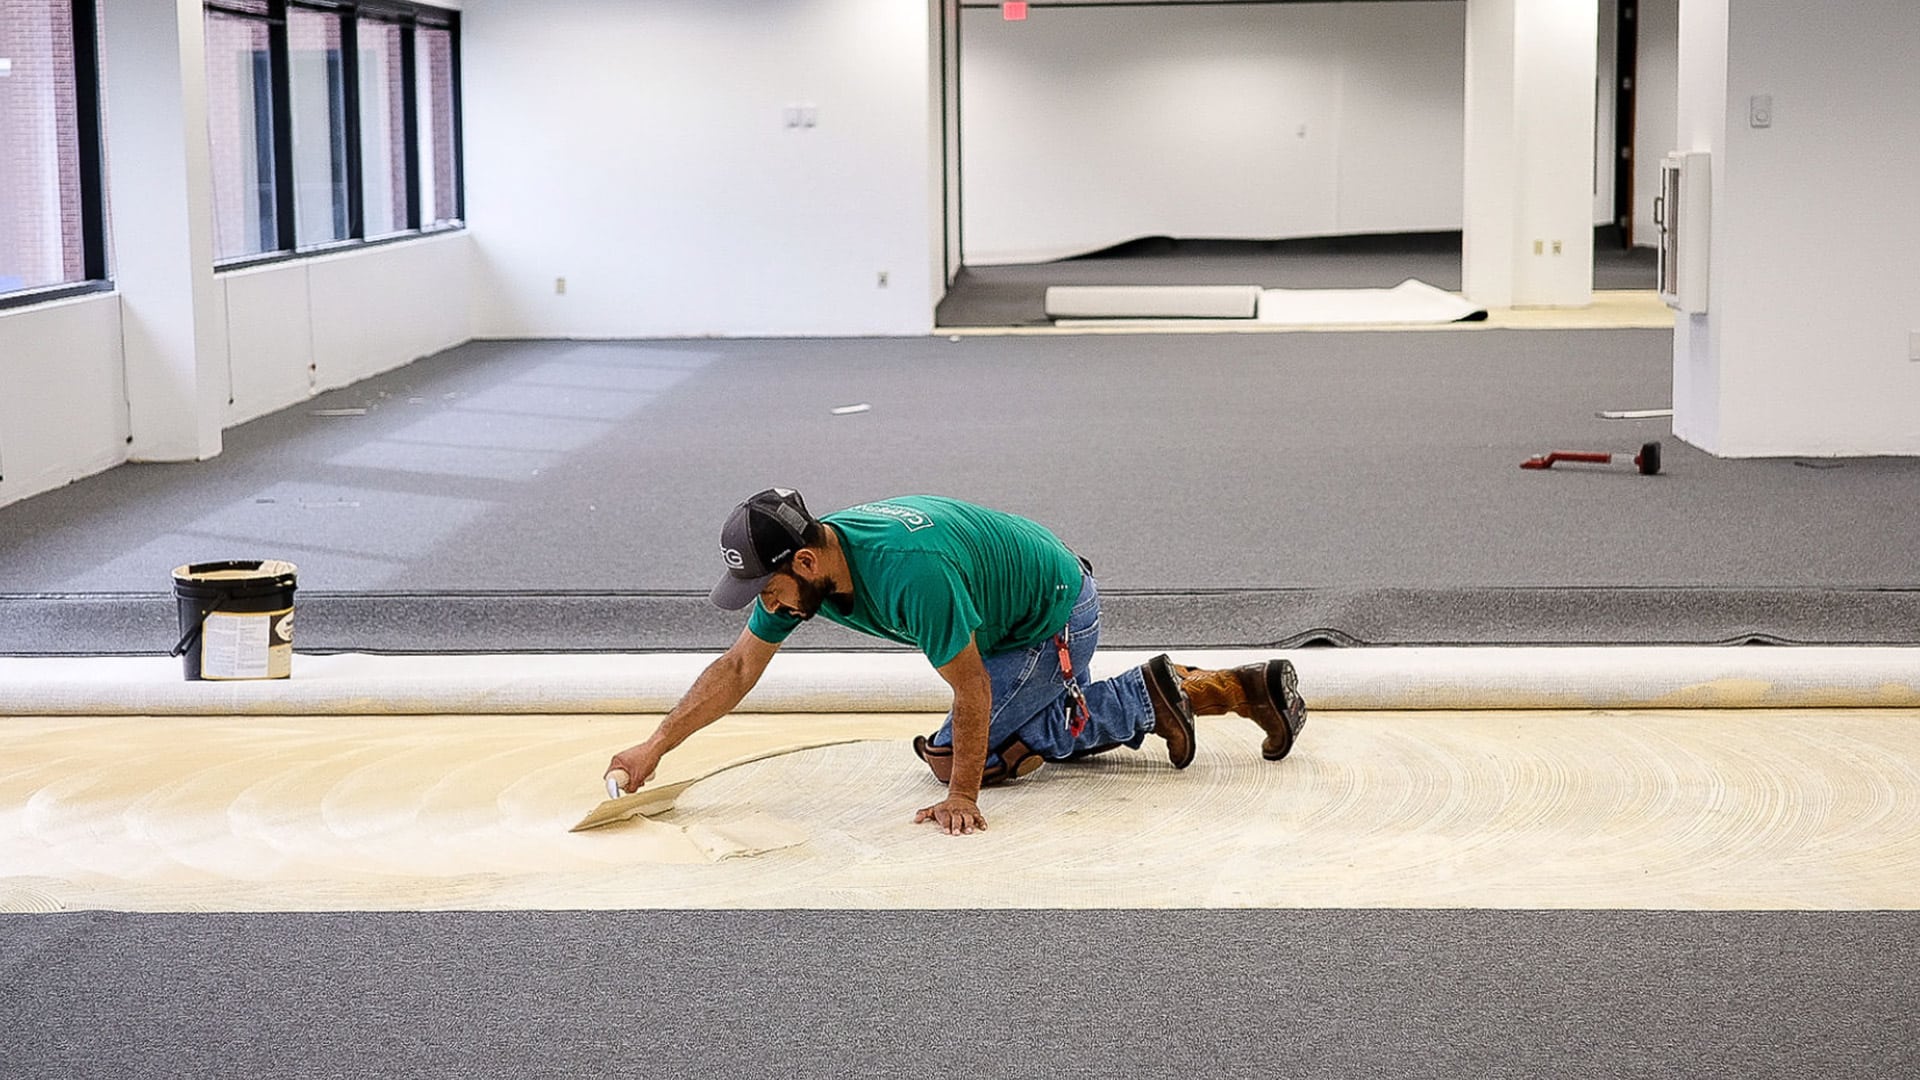 Carpet Now employee applying glue on floor